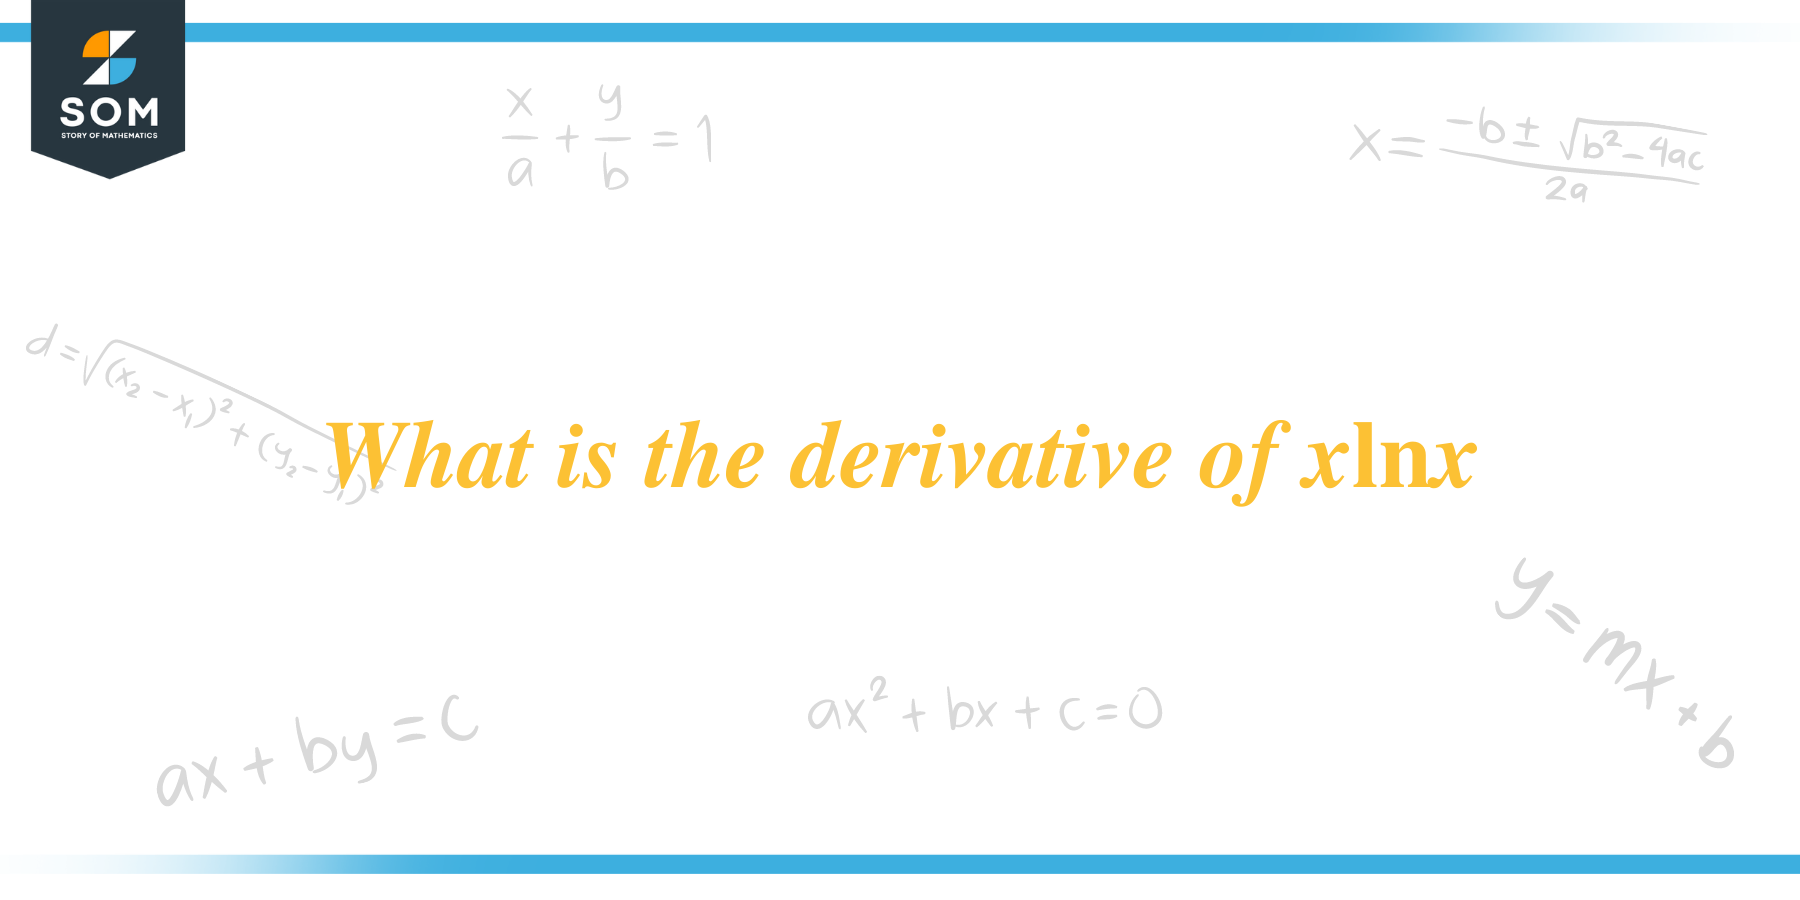 Derivative of xlnx title